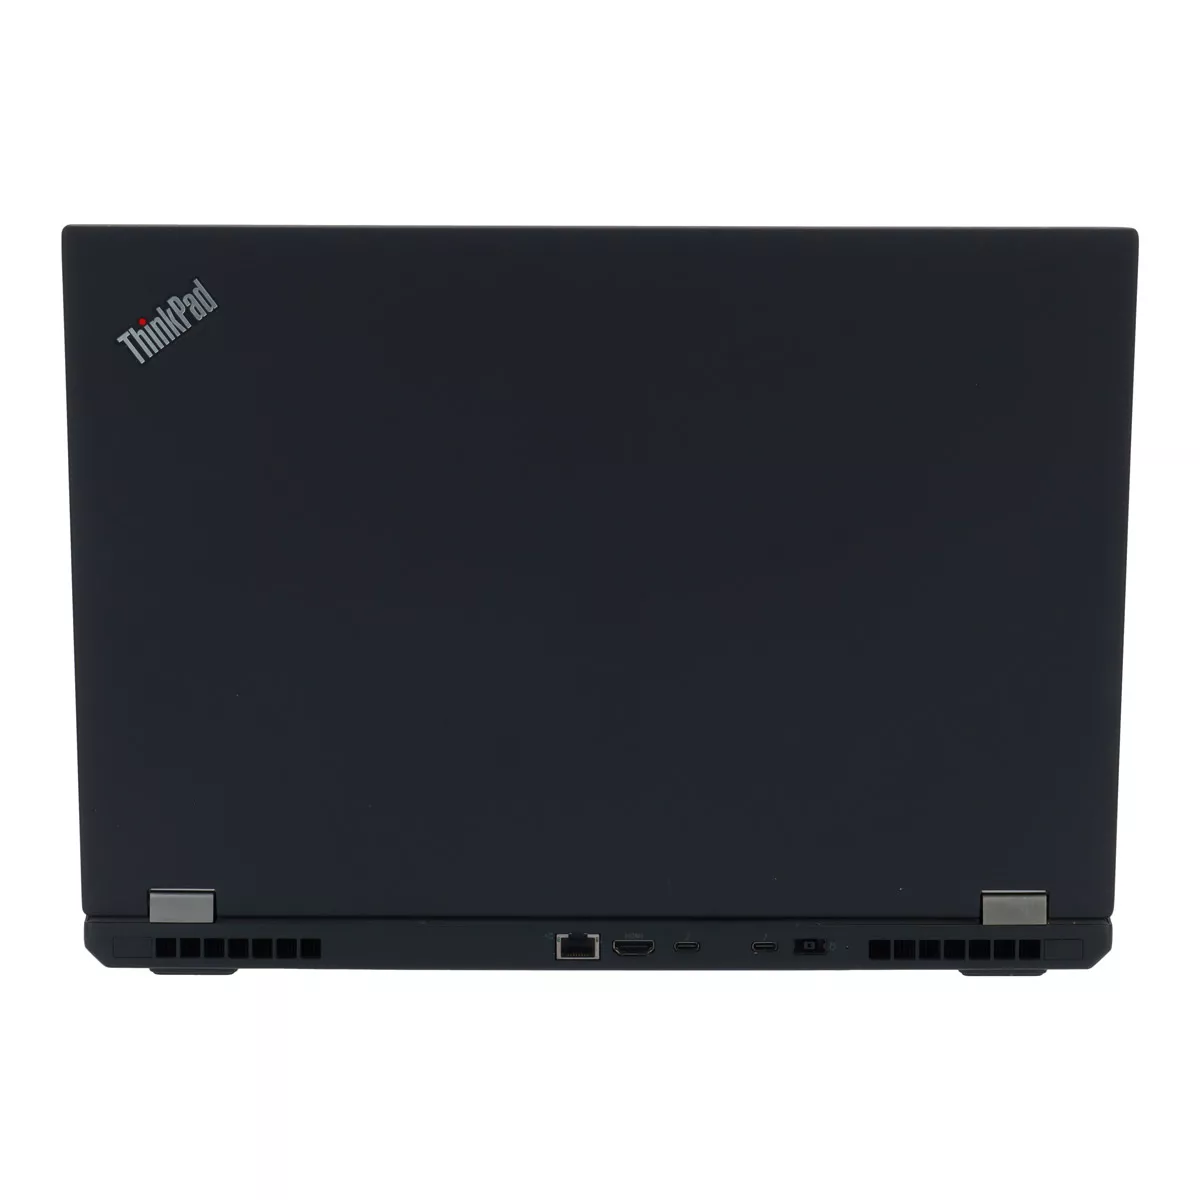 Lenovo ThinkPad P52 Core i7 8750H Full-HD nVidia Quadro P1000M 500 GB M.2 SSD Webcam A+